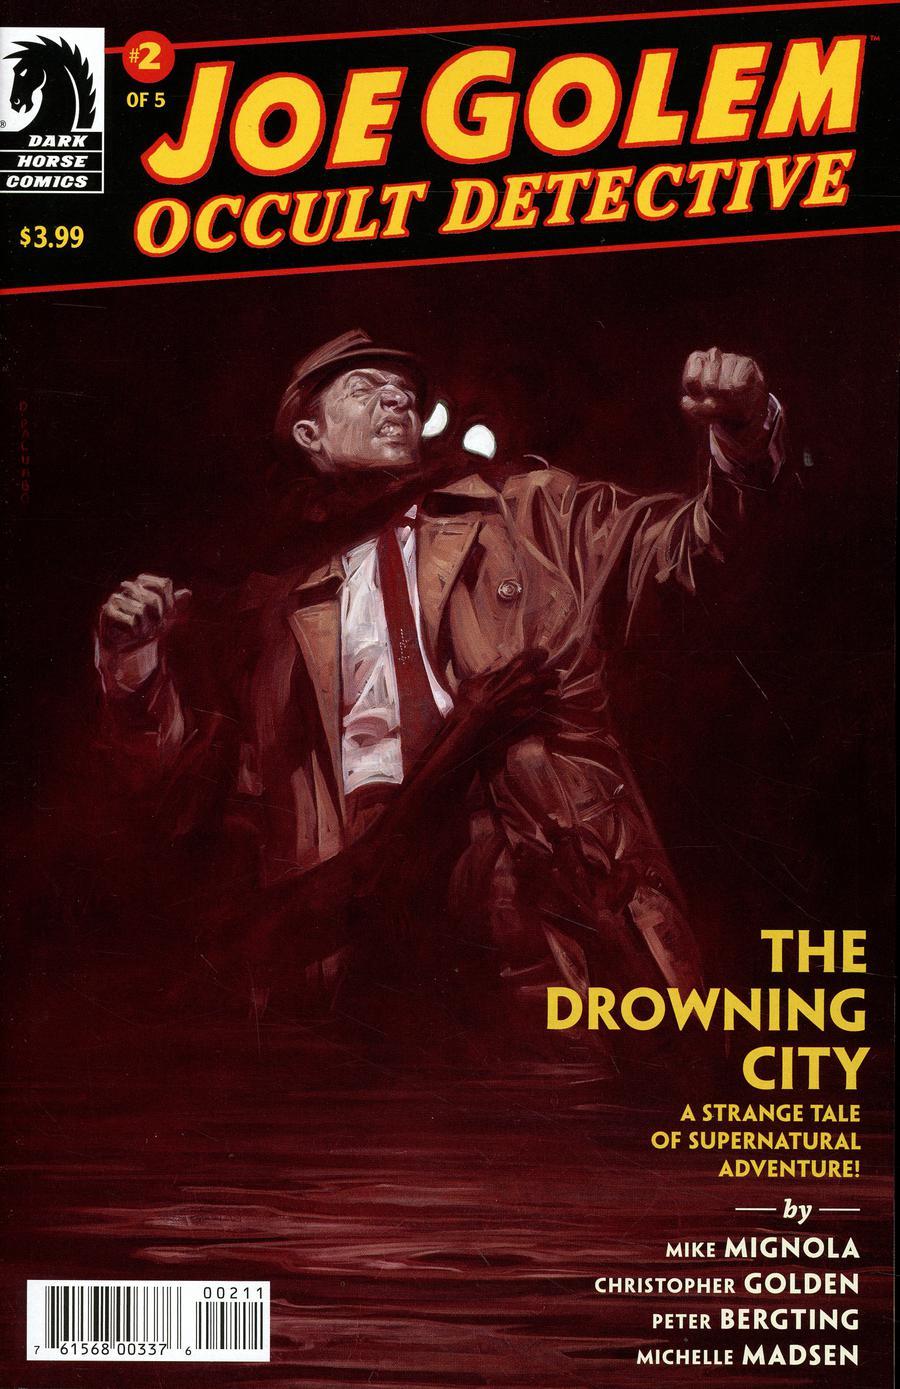 Joe Golem Occult Detective Drowning City Vol. 1 #2